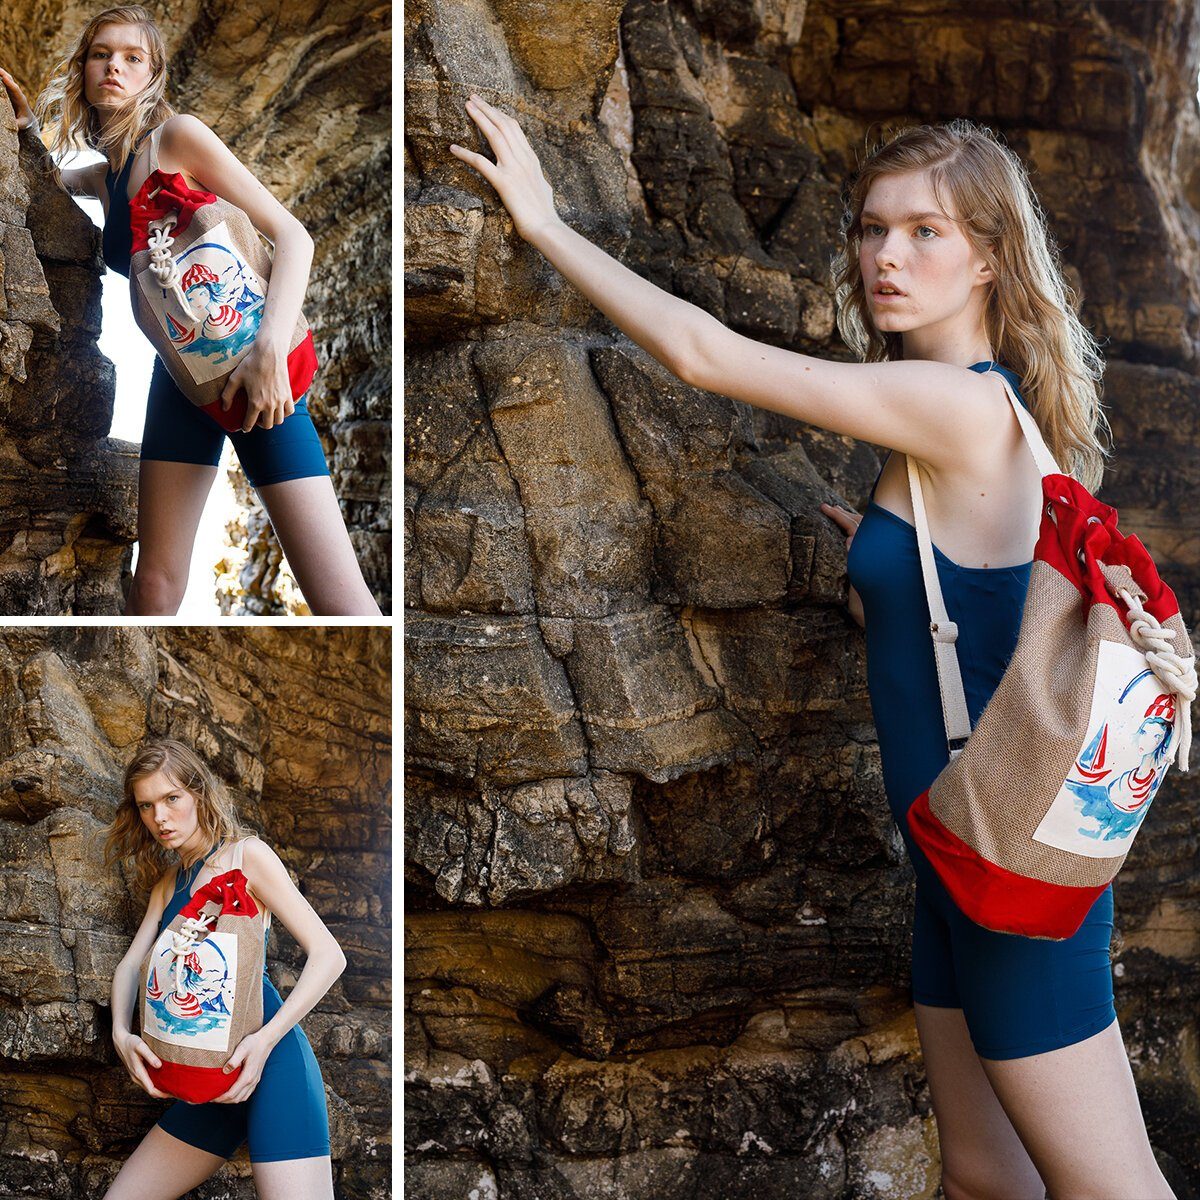 Anemoss Collection Sailor Girl Tasche Strandtasche ANEMOSS Jute Marine